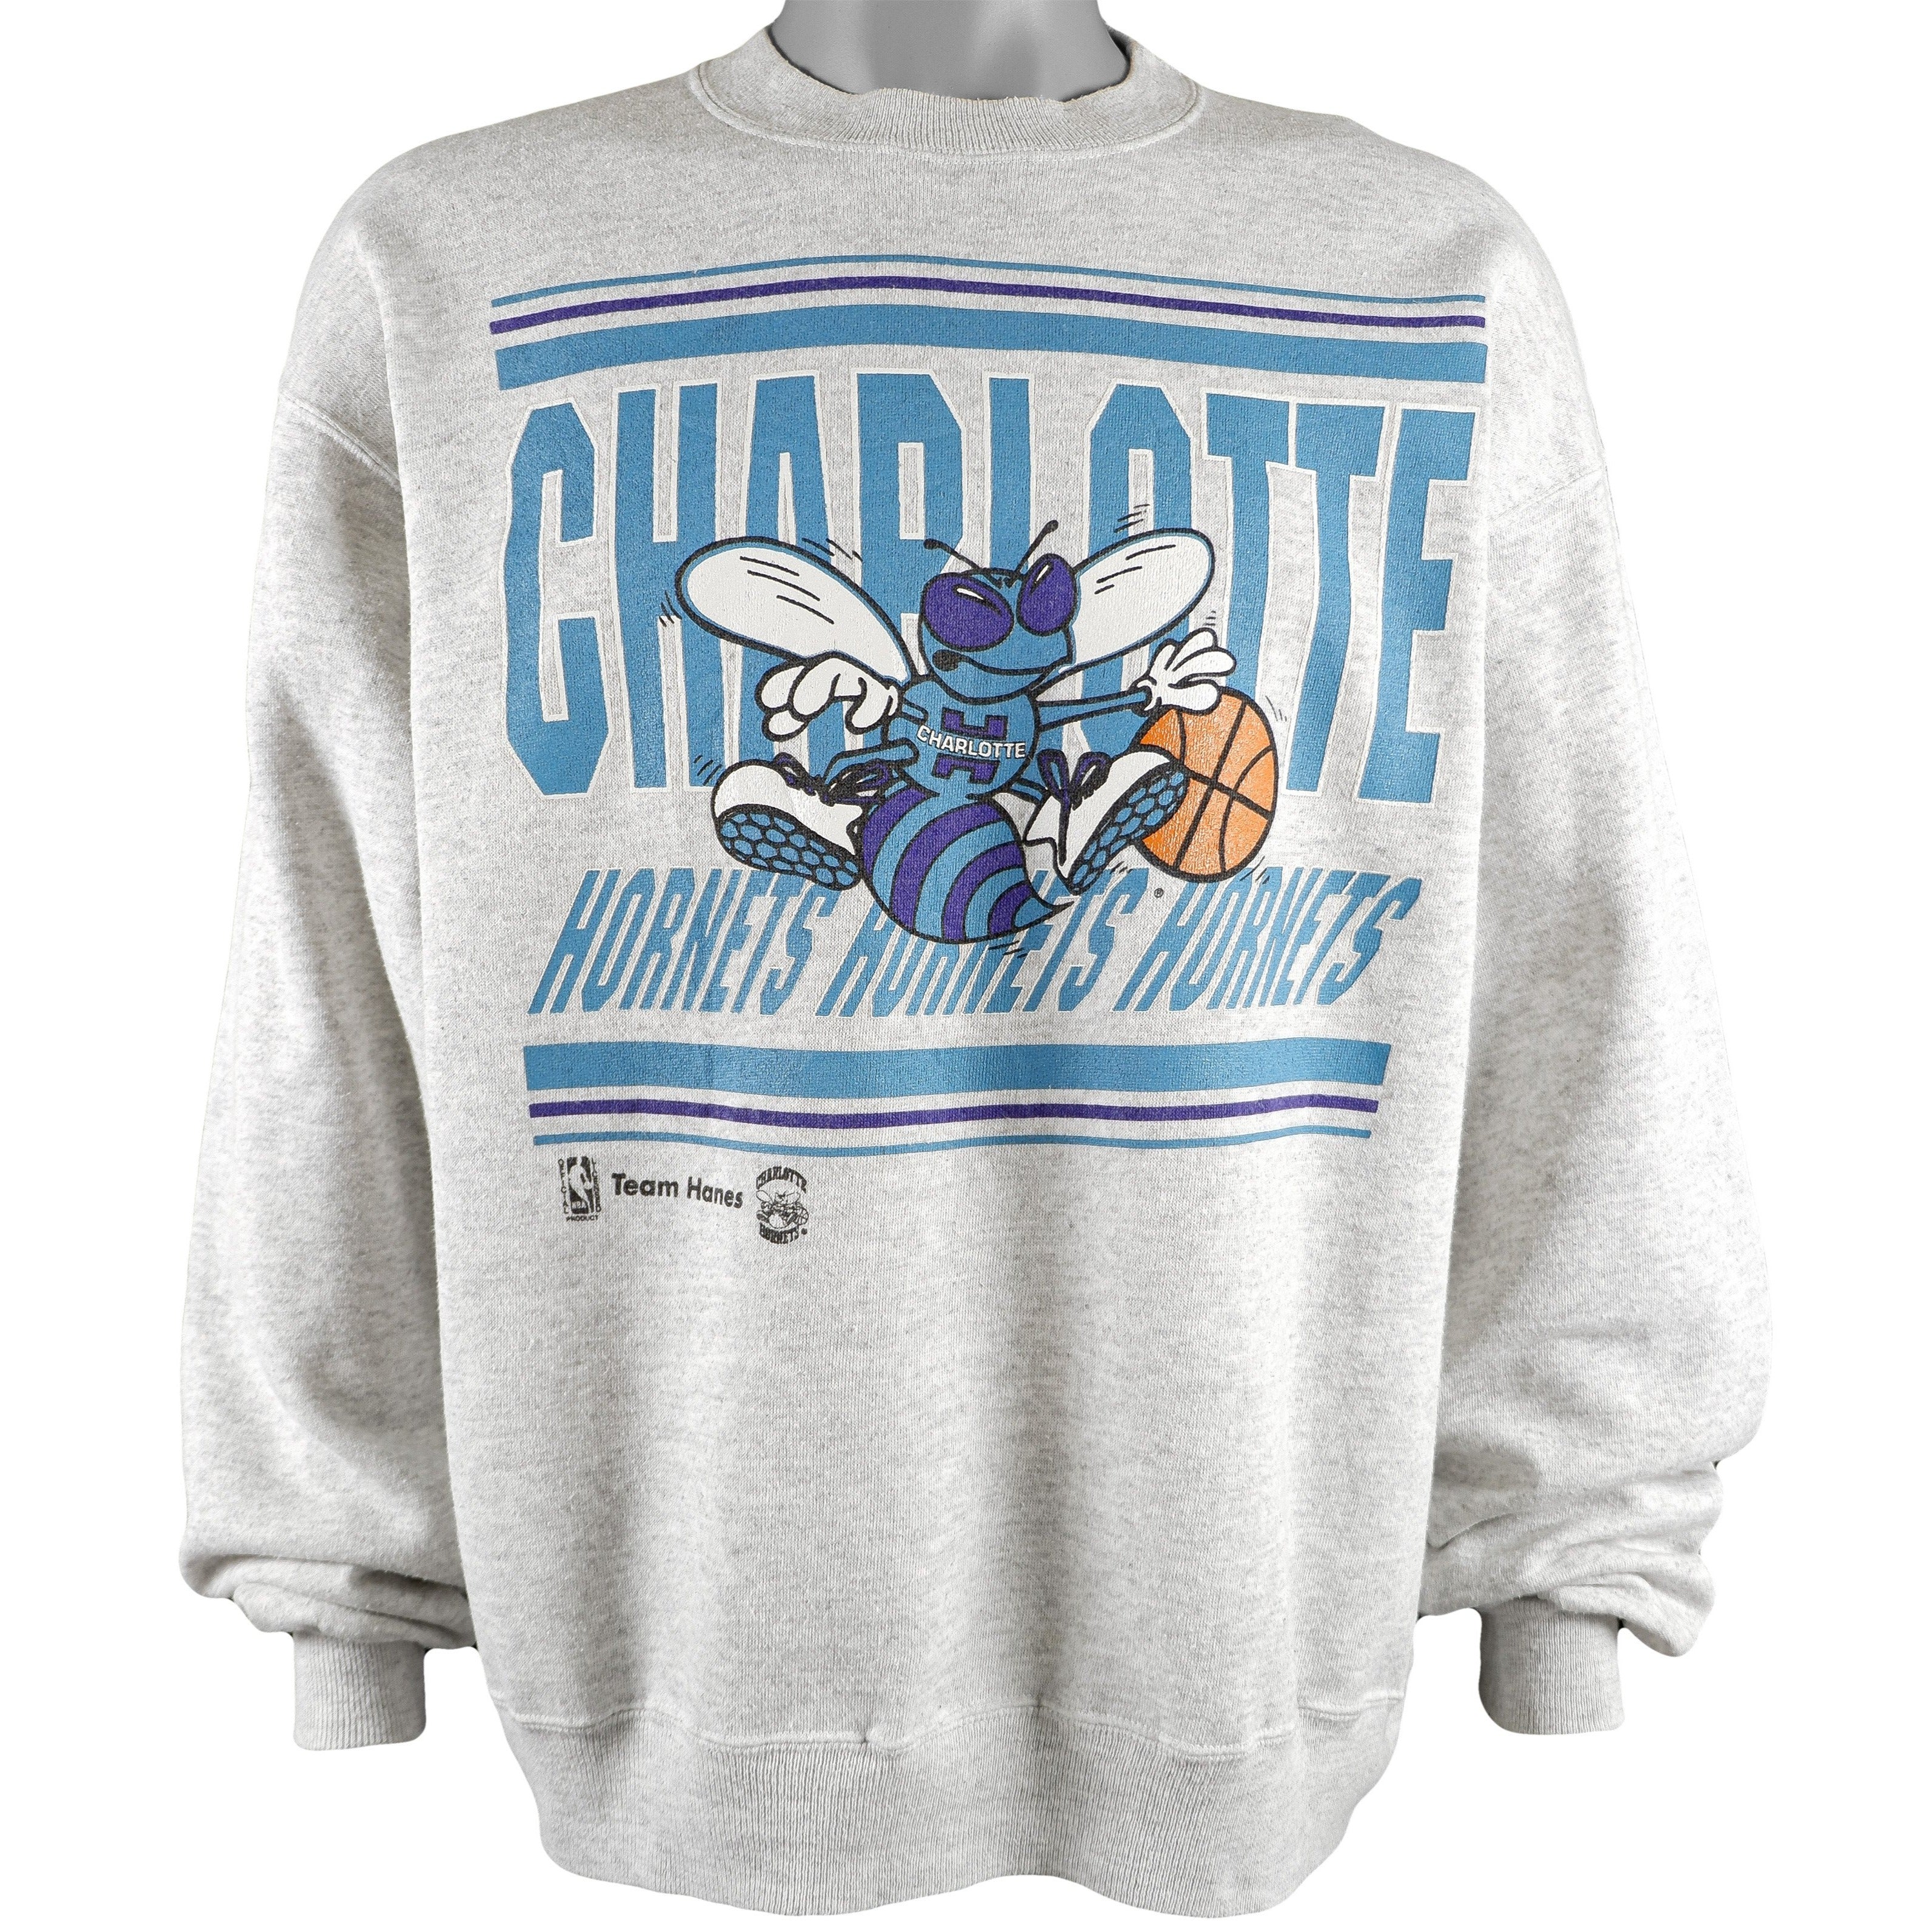 Charlotte Hornets T-Shirt Classic Retro Sweatshirt Basketball 90S